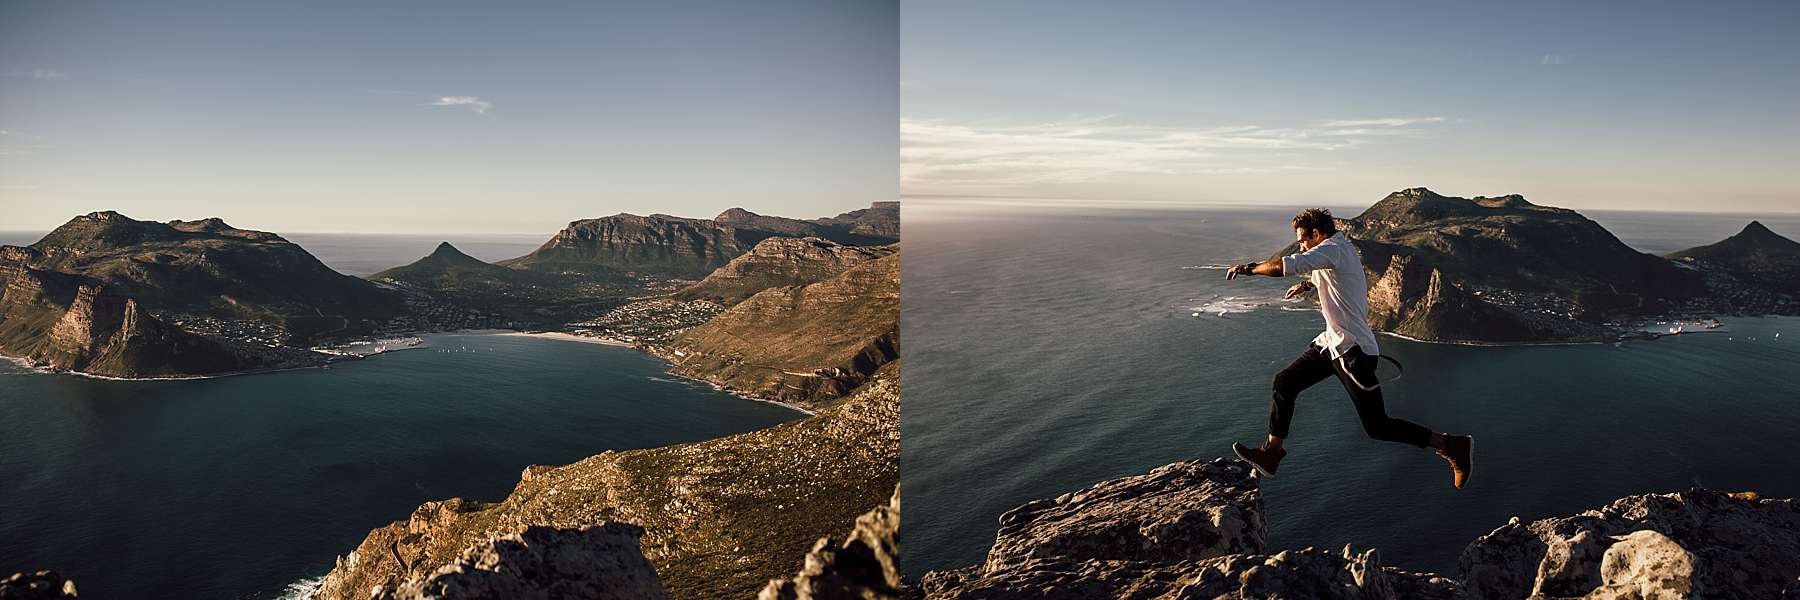 LOTTYH-South-Africa-Cape-Town-Elopement-Photographer_0001.jpg